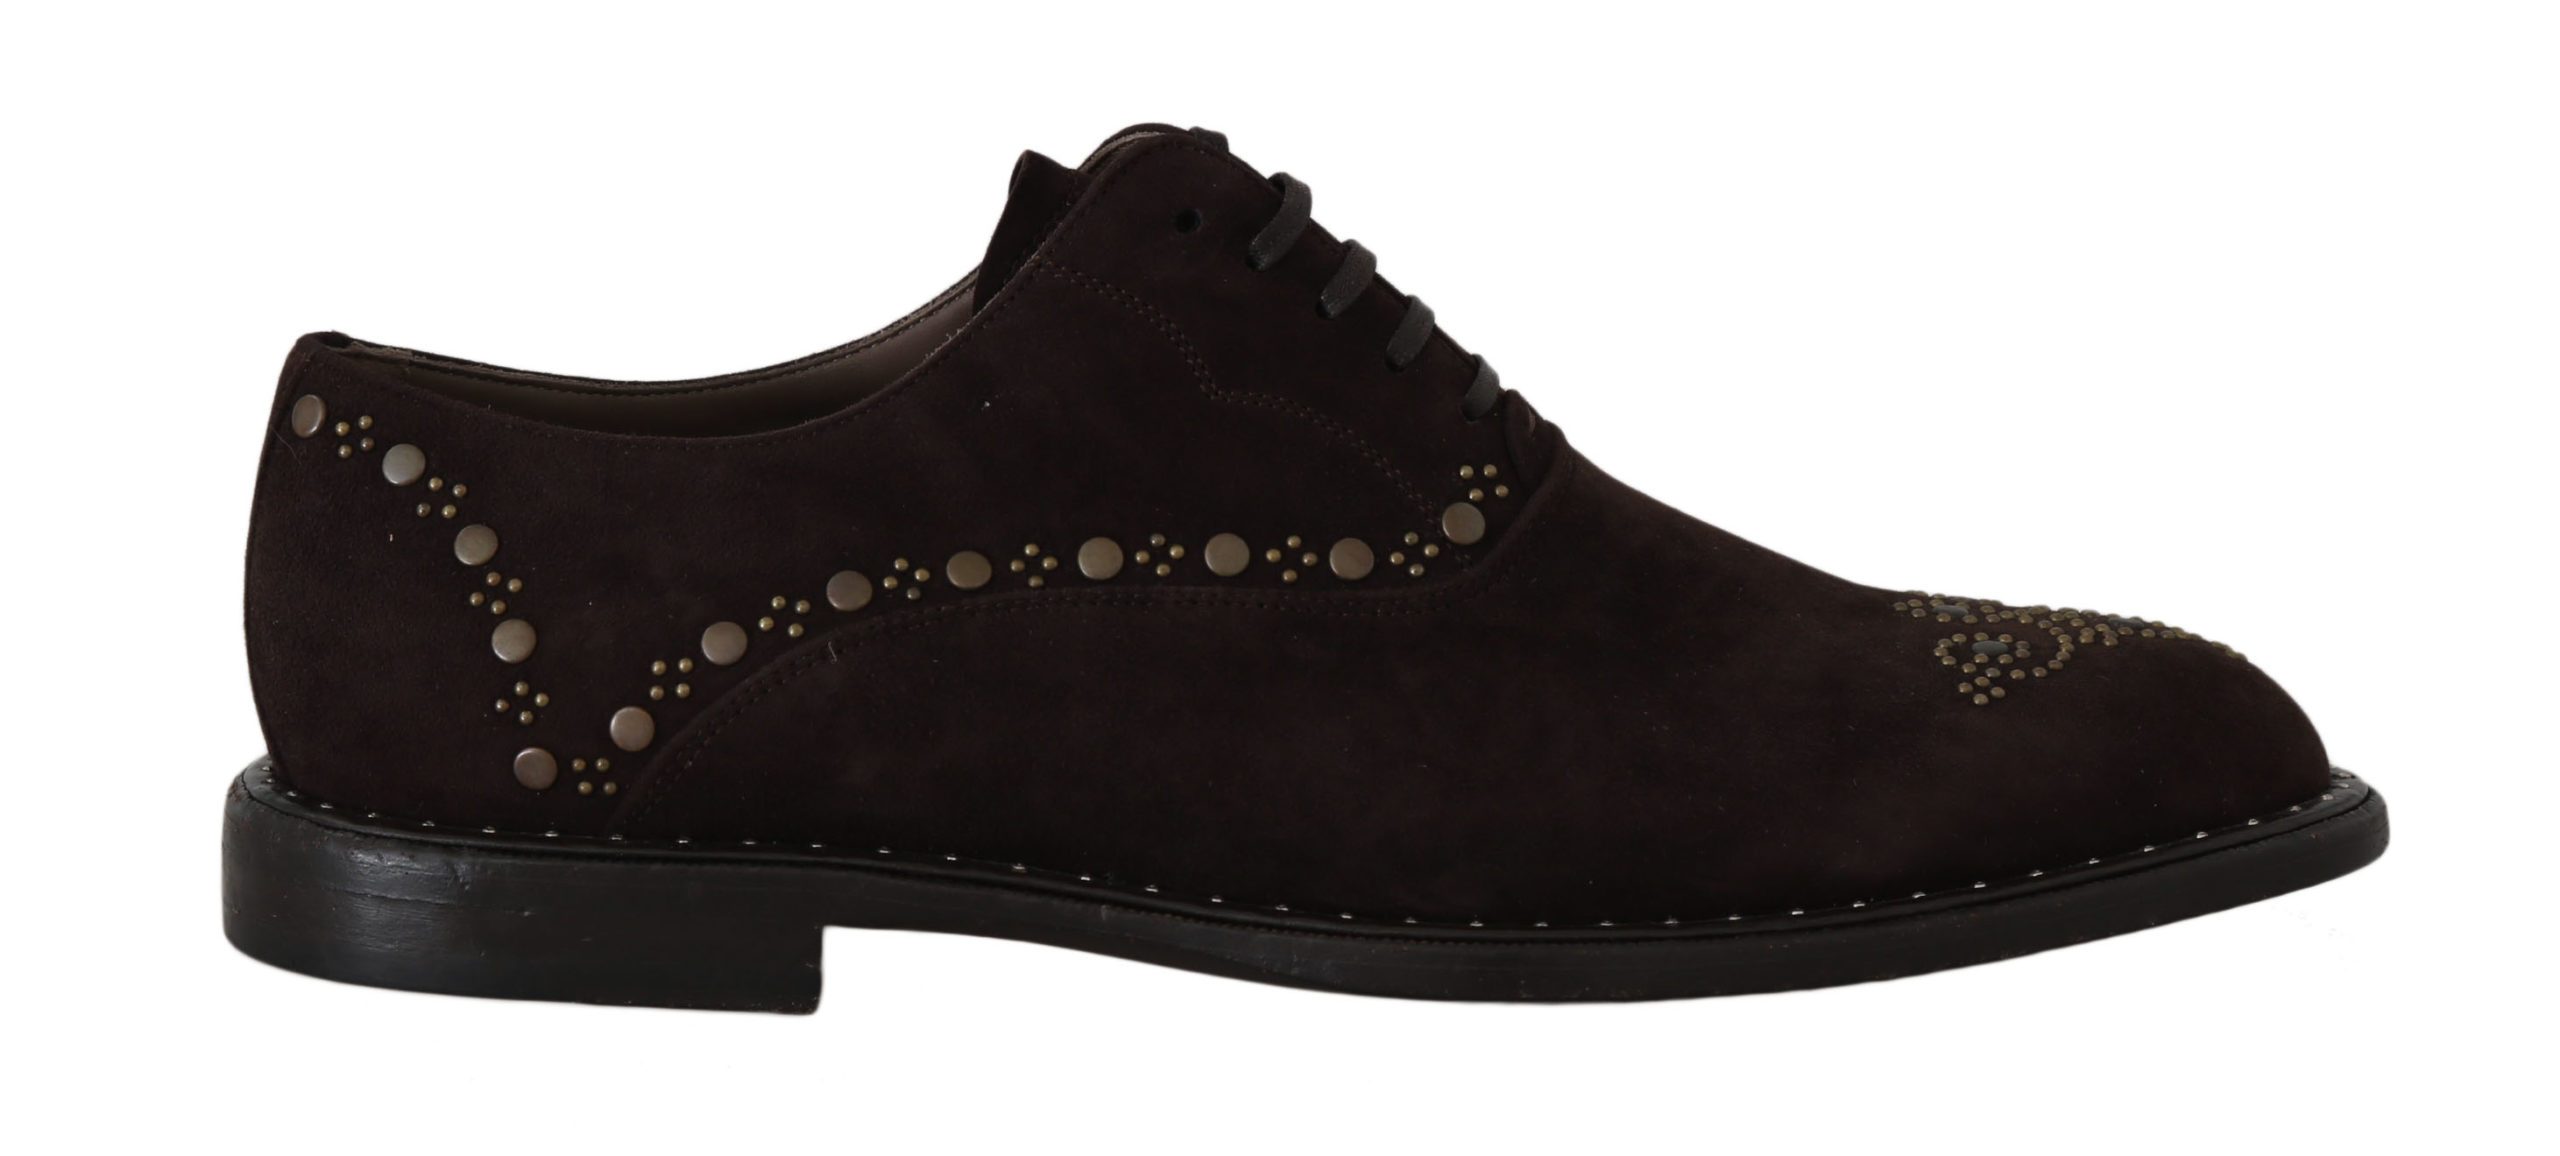 Dolce & Gabbana Men's Suede Marsala Derby Studded Shoes Brown MV2187 - EU39/US6